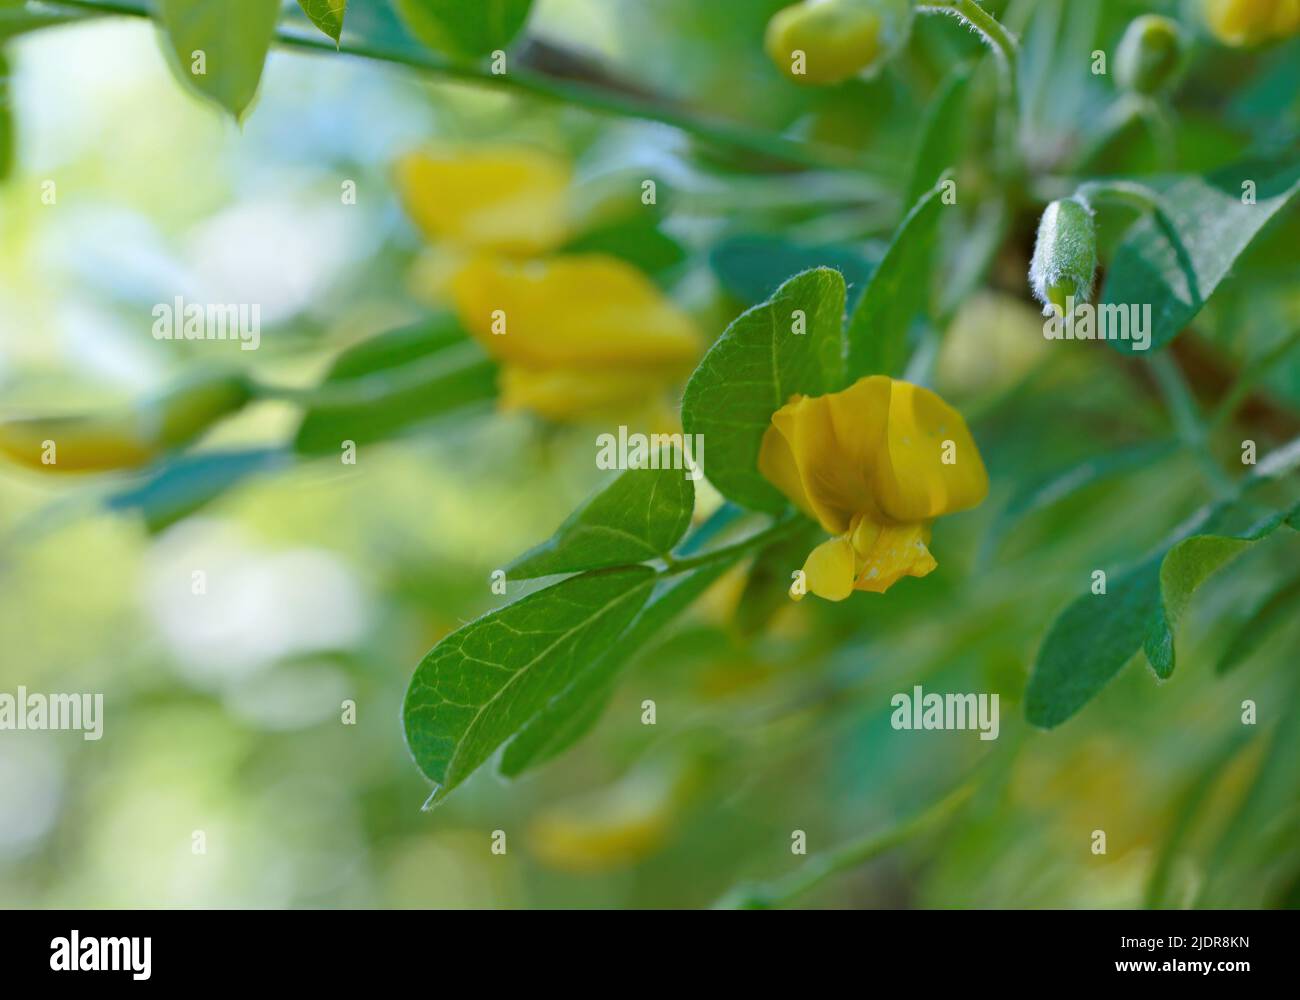 Siberian pea shrub flowering with yellow flowers Stock Photo